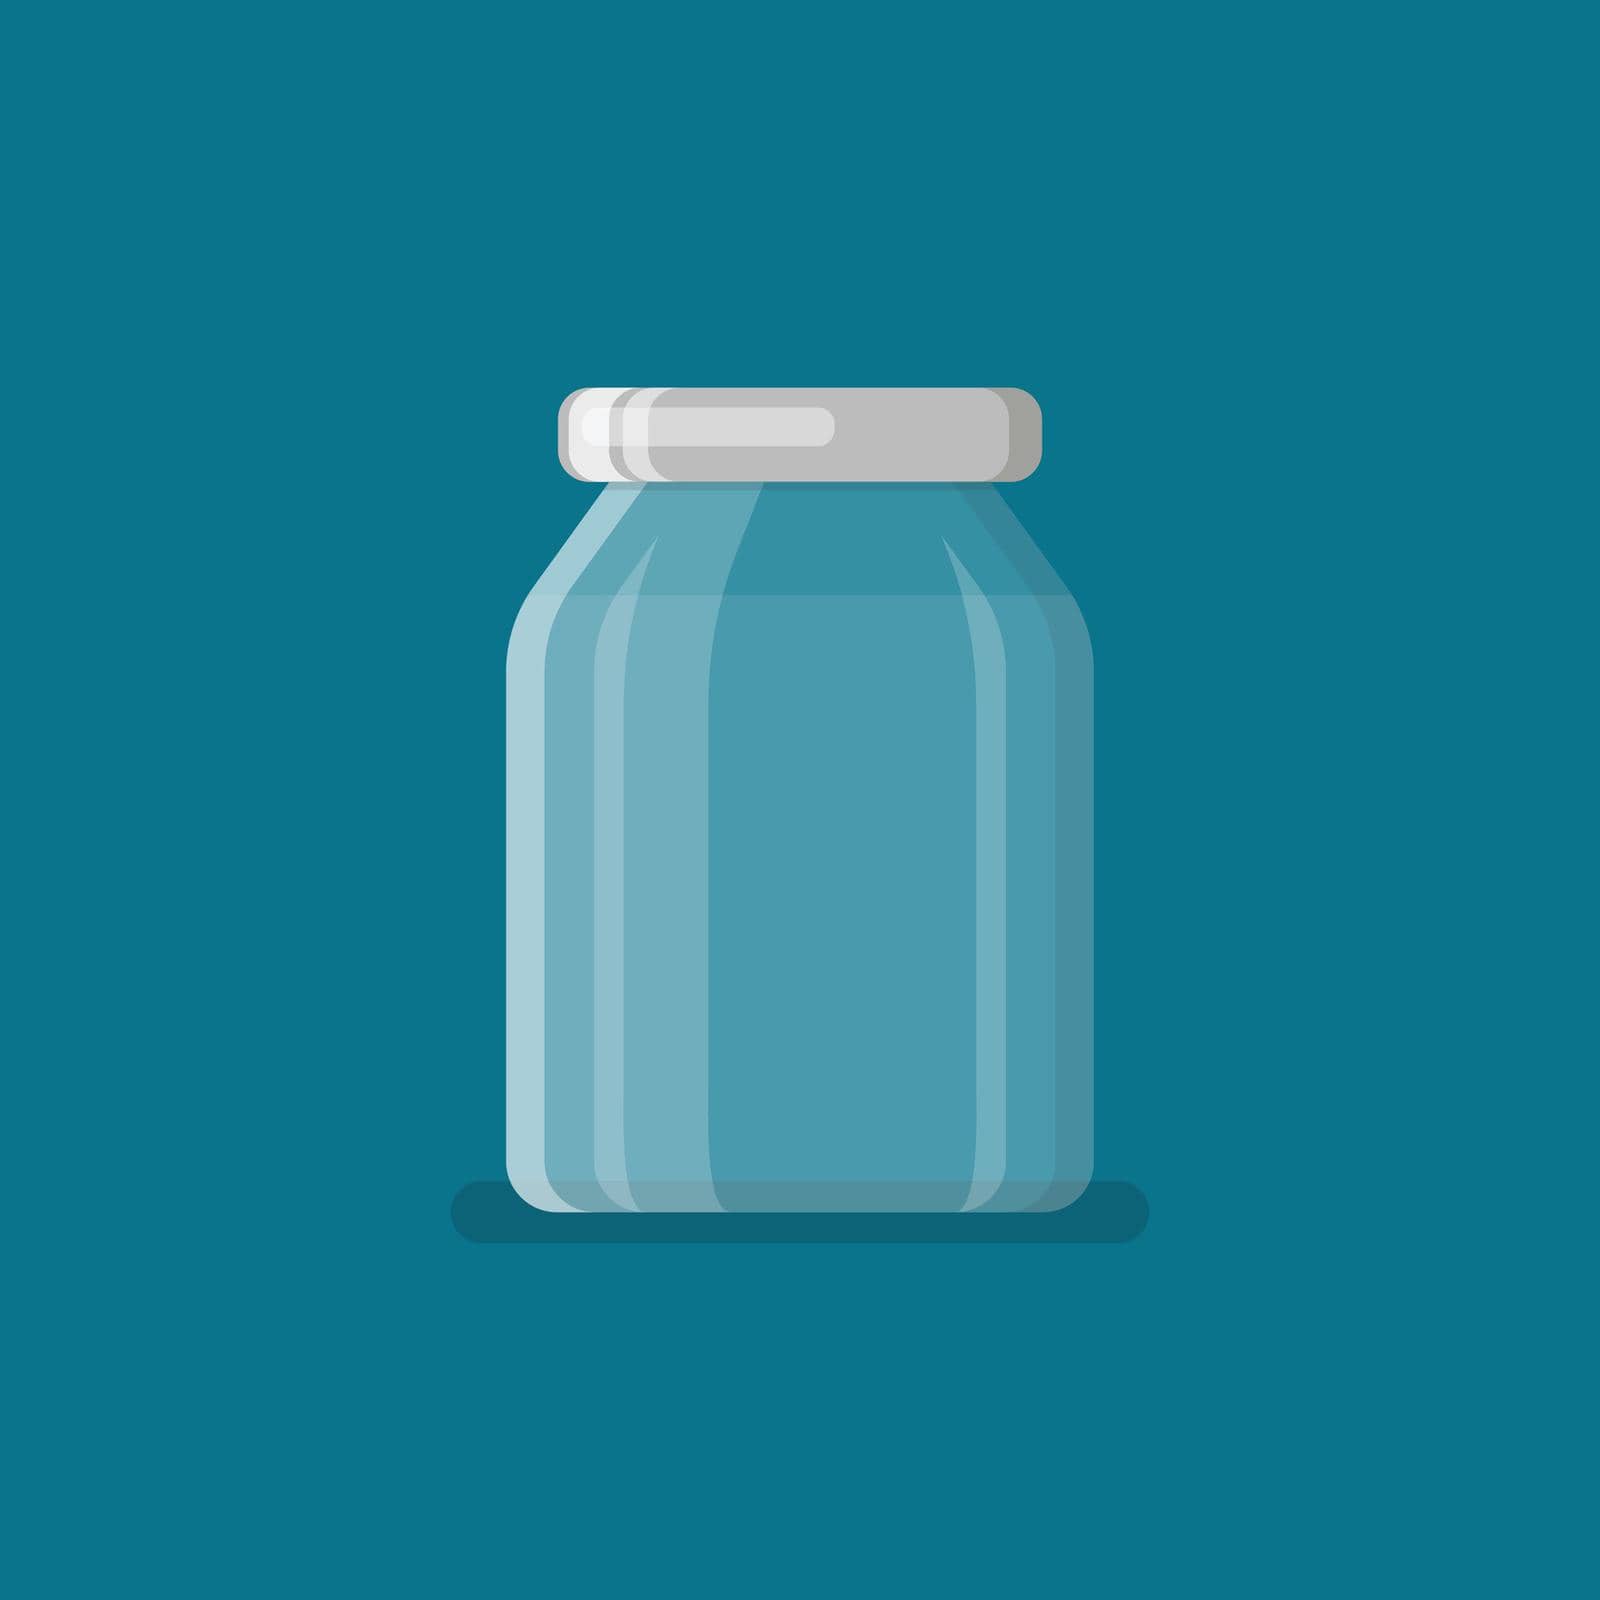 Jar in flat style. Vector illustration 